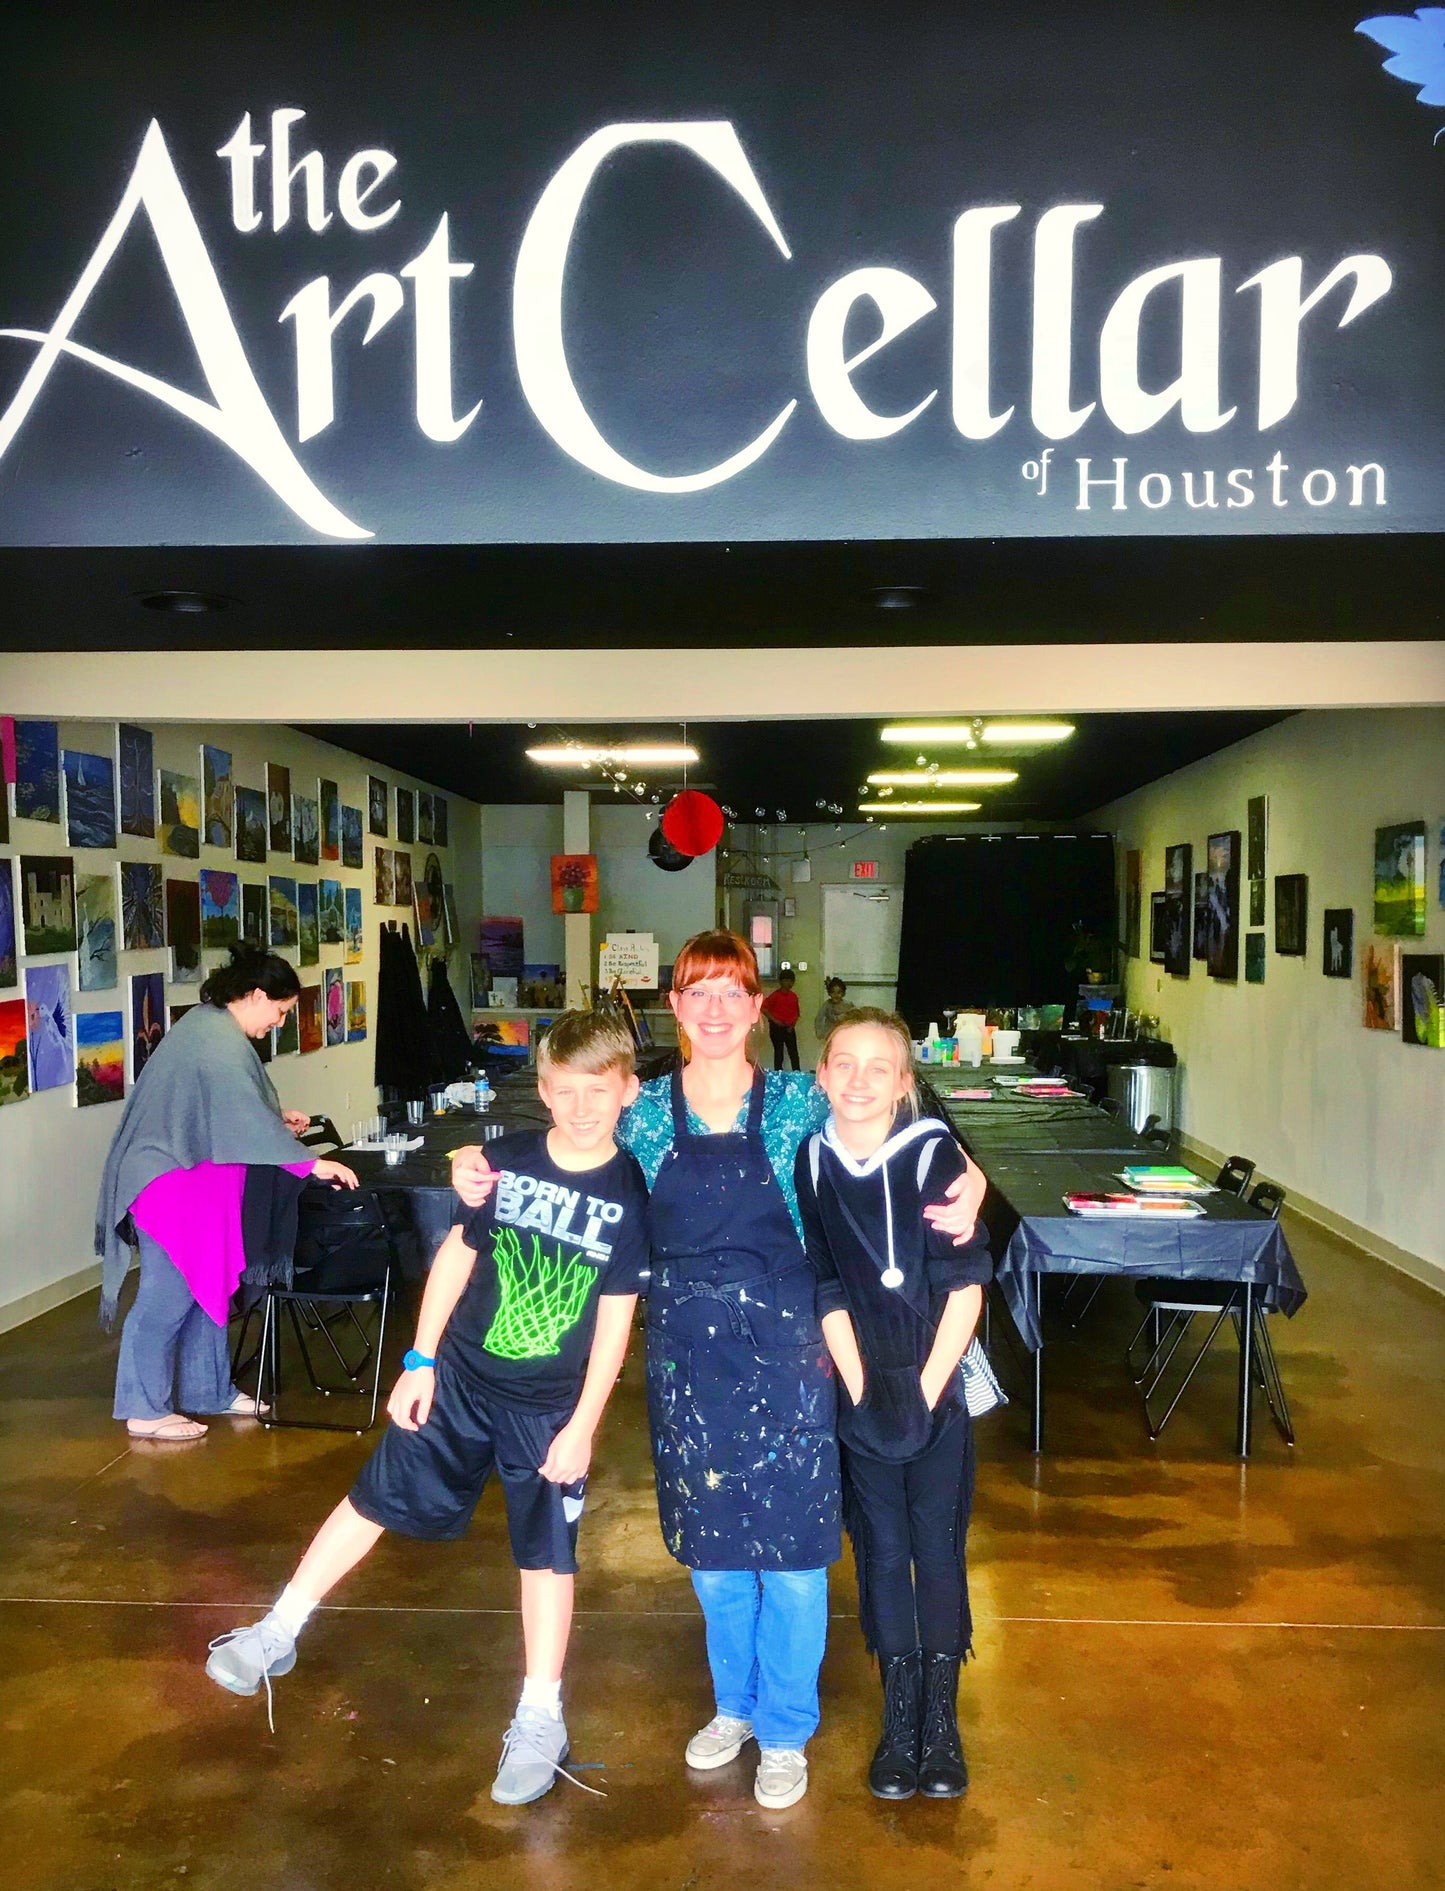 Sat, Mar 4th, 9-11A “A Texas Day” Public Houston Family Painting Class